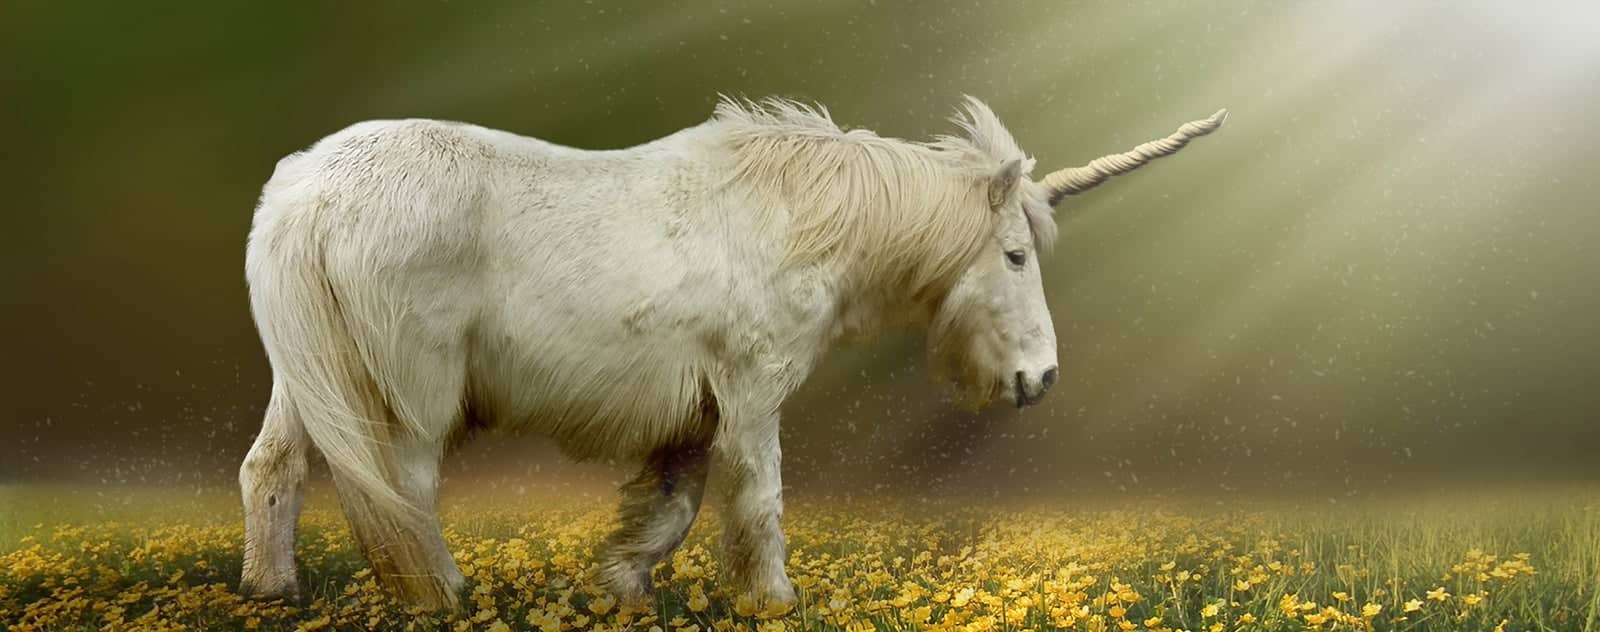 Einhorn Pony